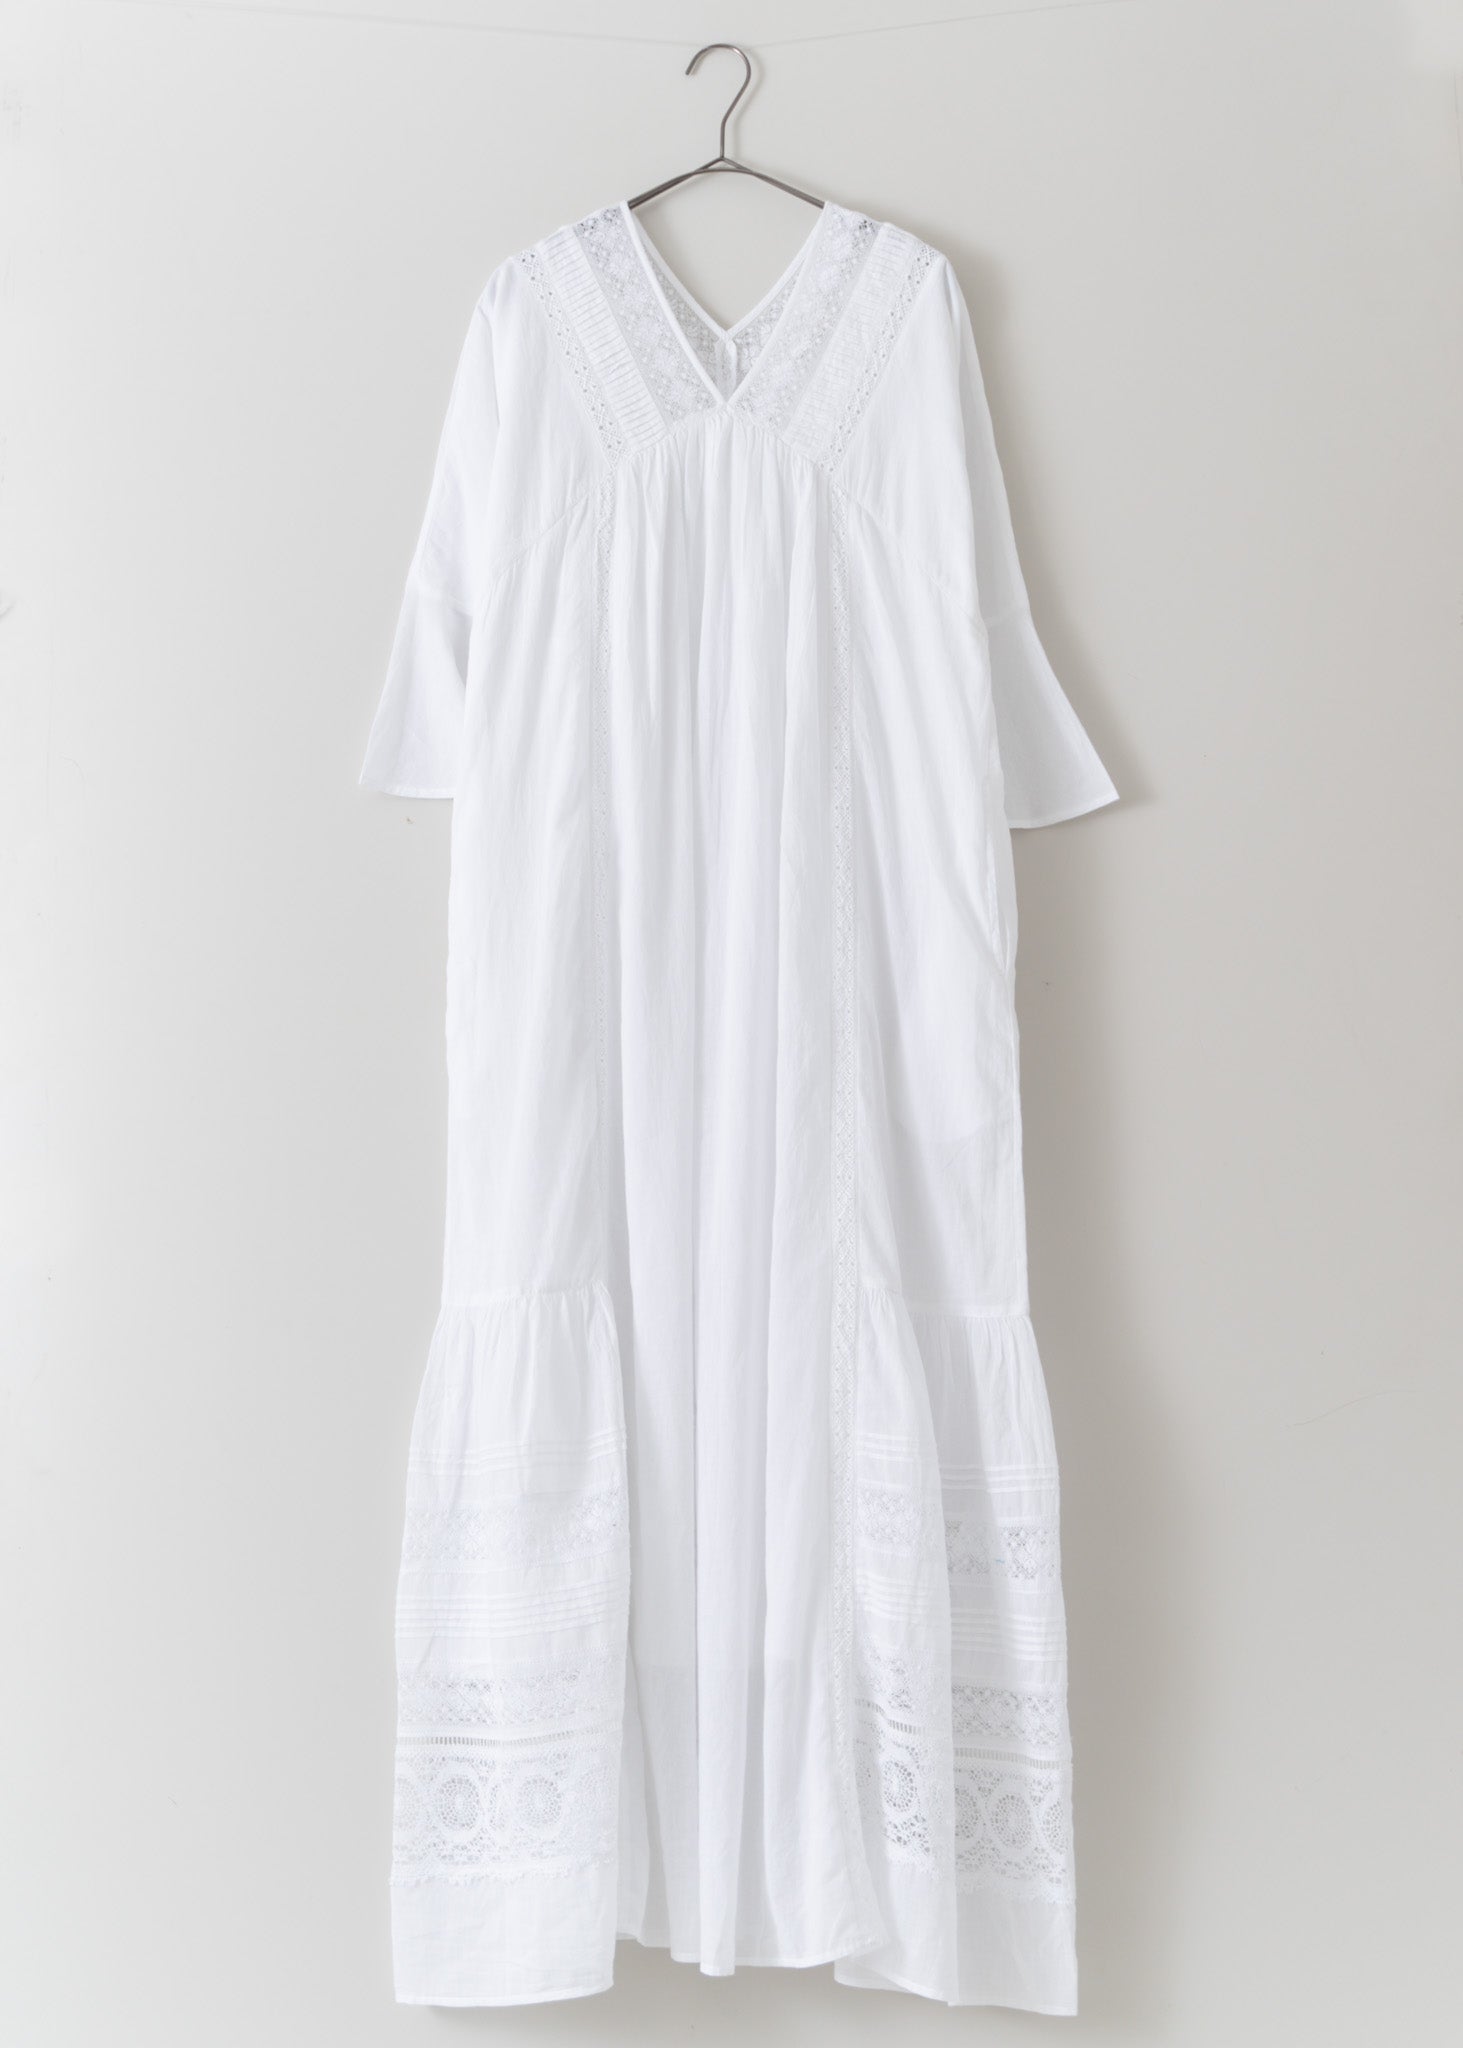 Cotton Voile Lace & Pin Tuck Dress